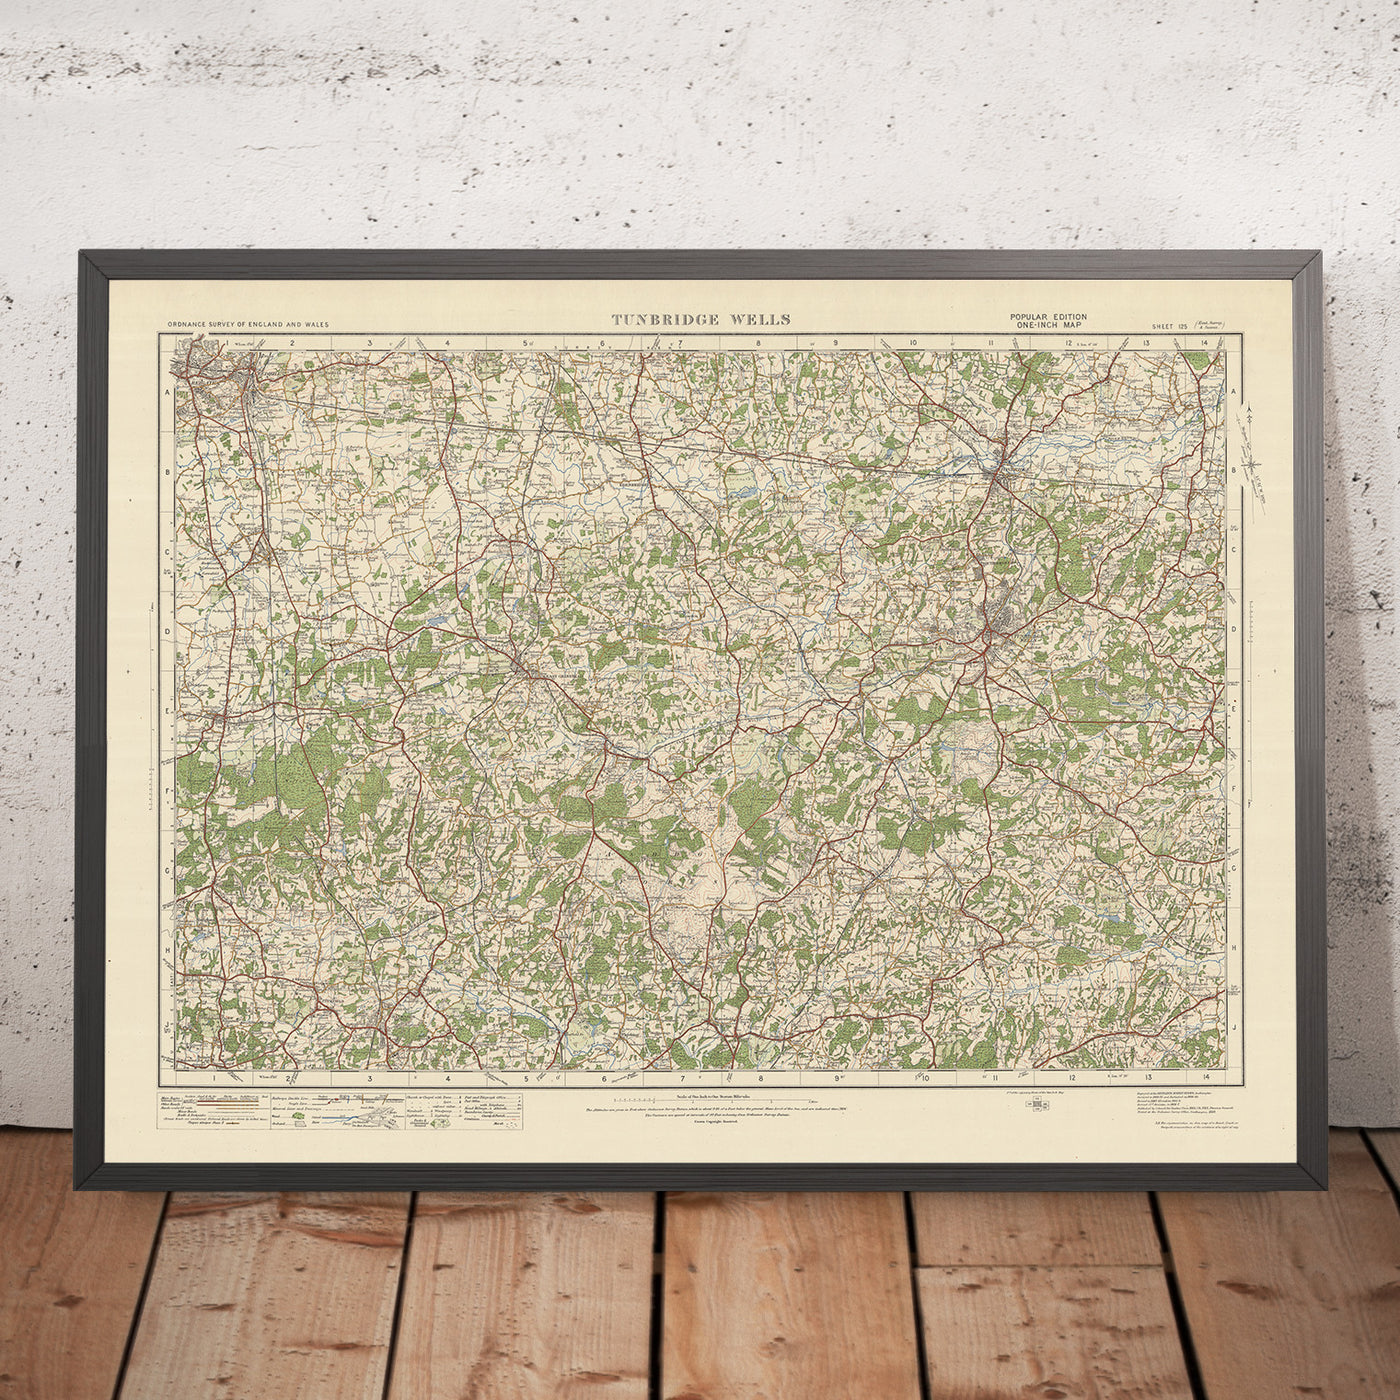 Old Ordnance Survey Map, Sheet 125 - Tunbridge Wells, 1925: Redhill, Tonbridge, Haywards Heath, Crawley, and High Weald AONB